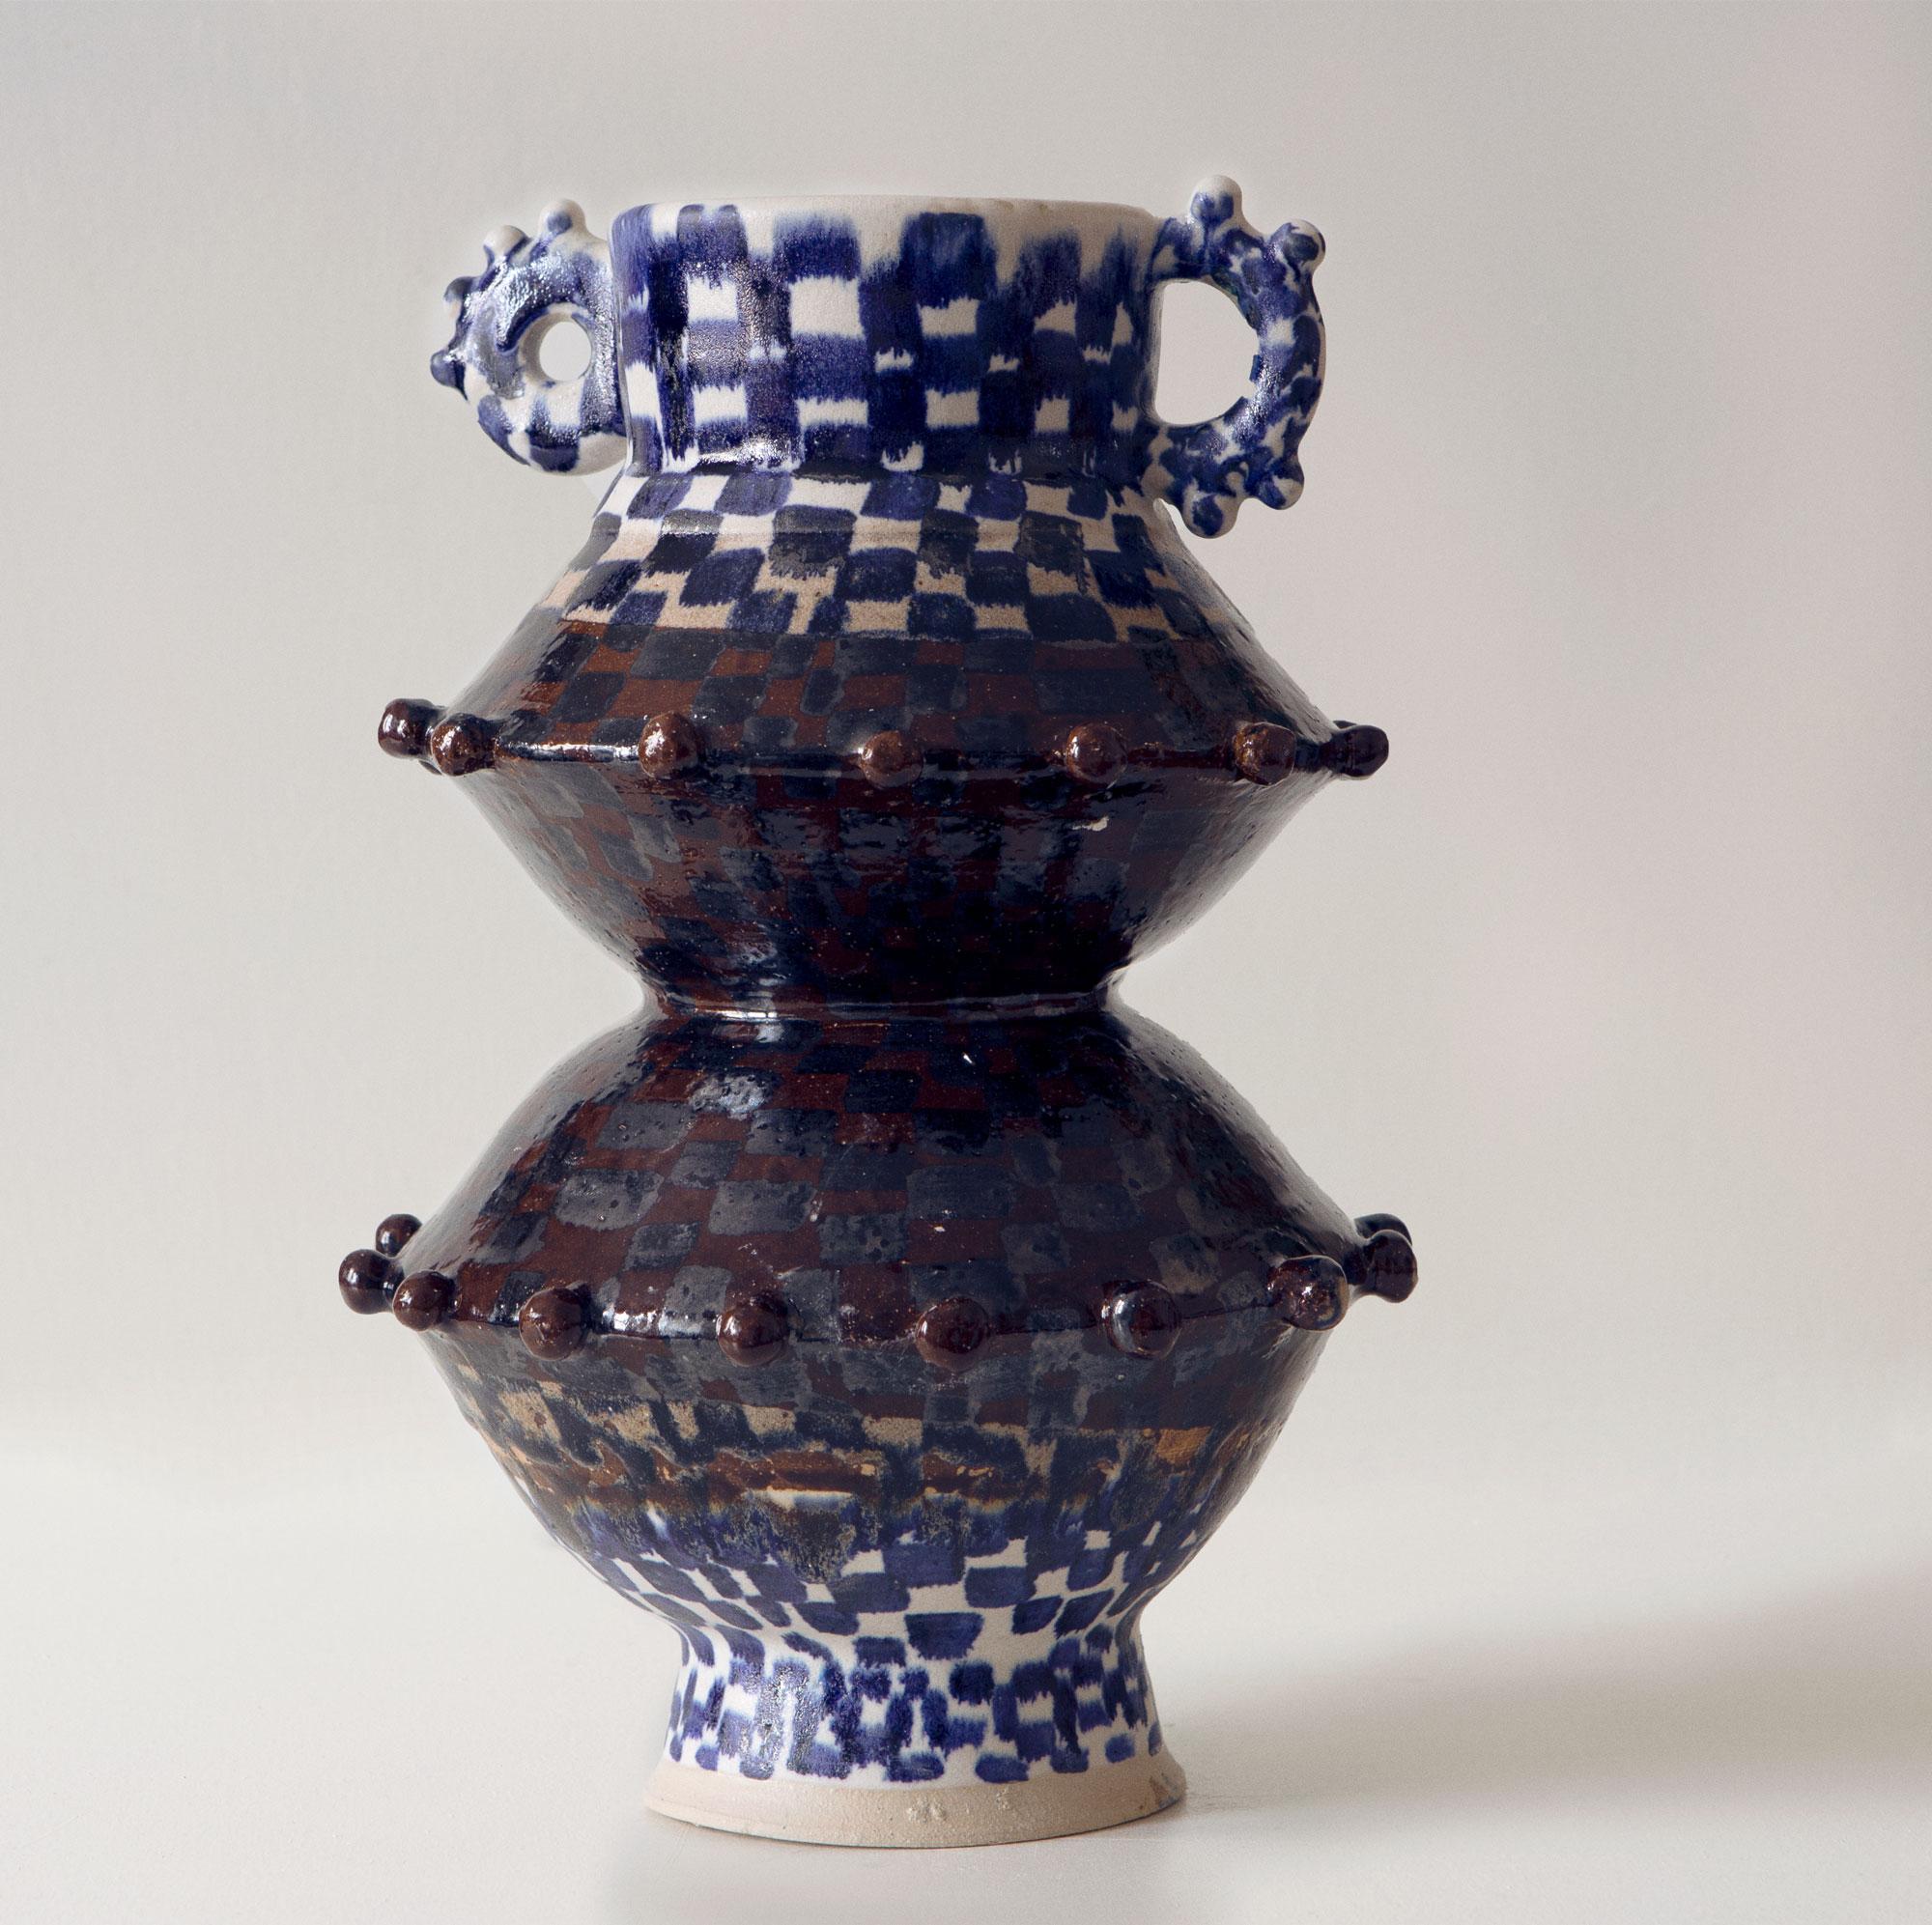 Bead Totem Ear Vase - Modern Abstract Ornamental Ceramic Sculptural Vase